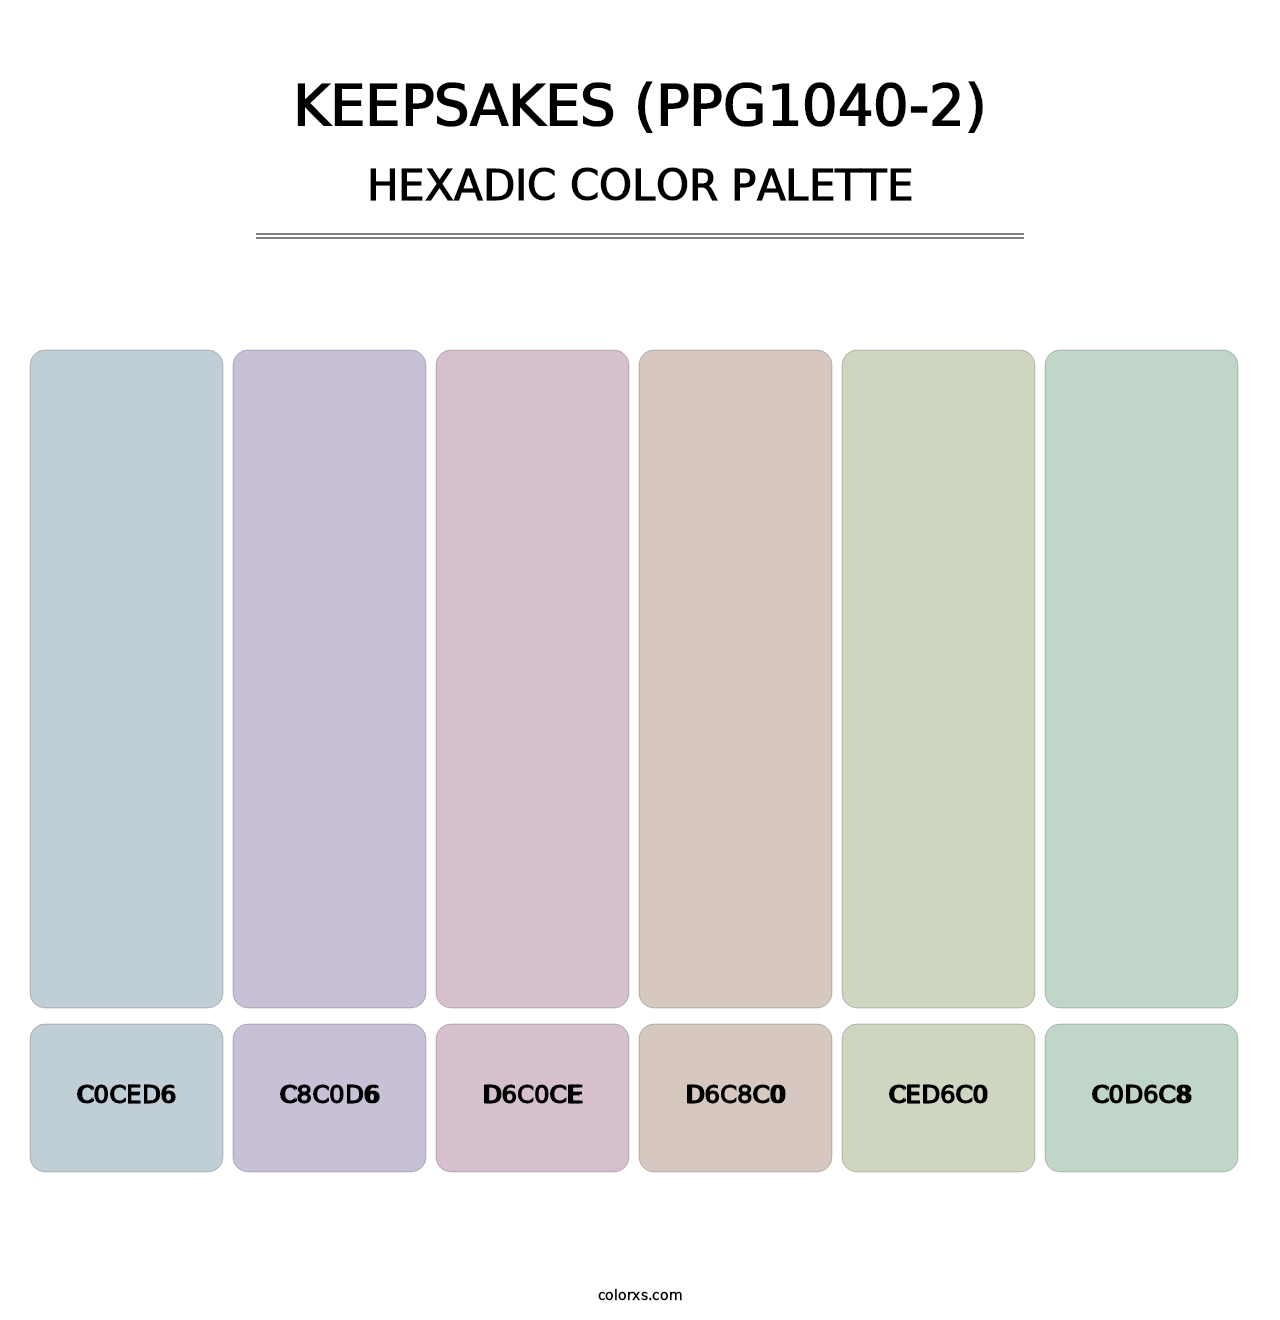 Keepsakes (PPG1040-2) - Hexadic Color Palette